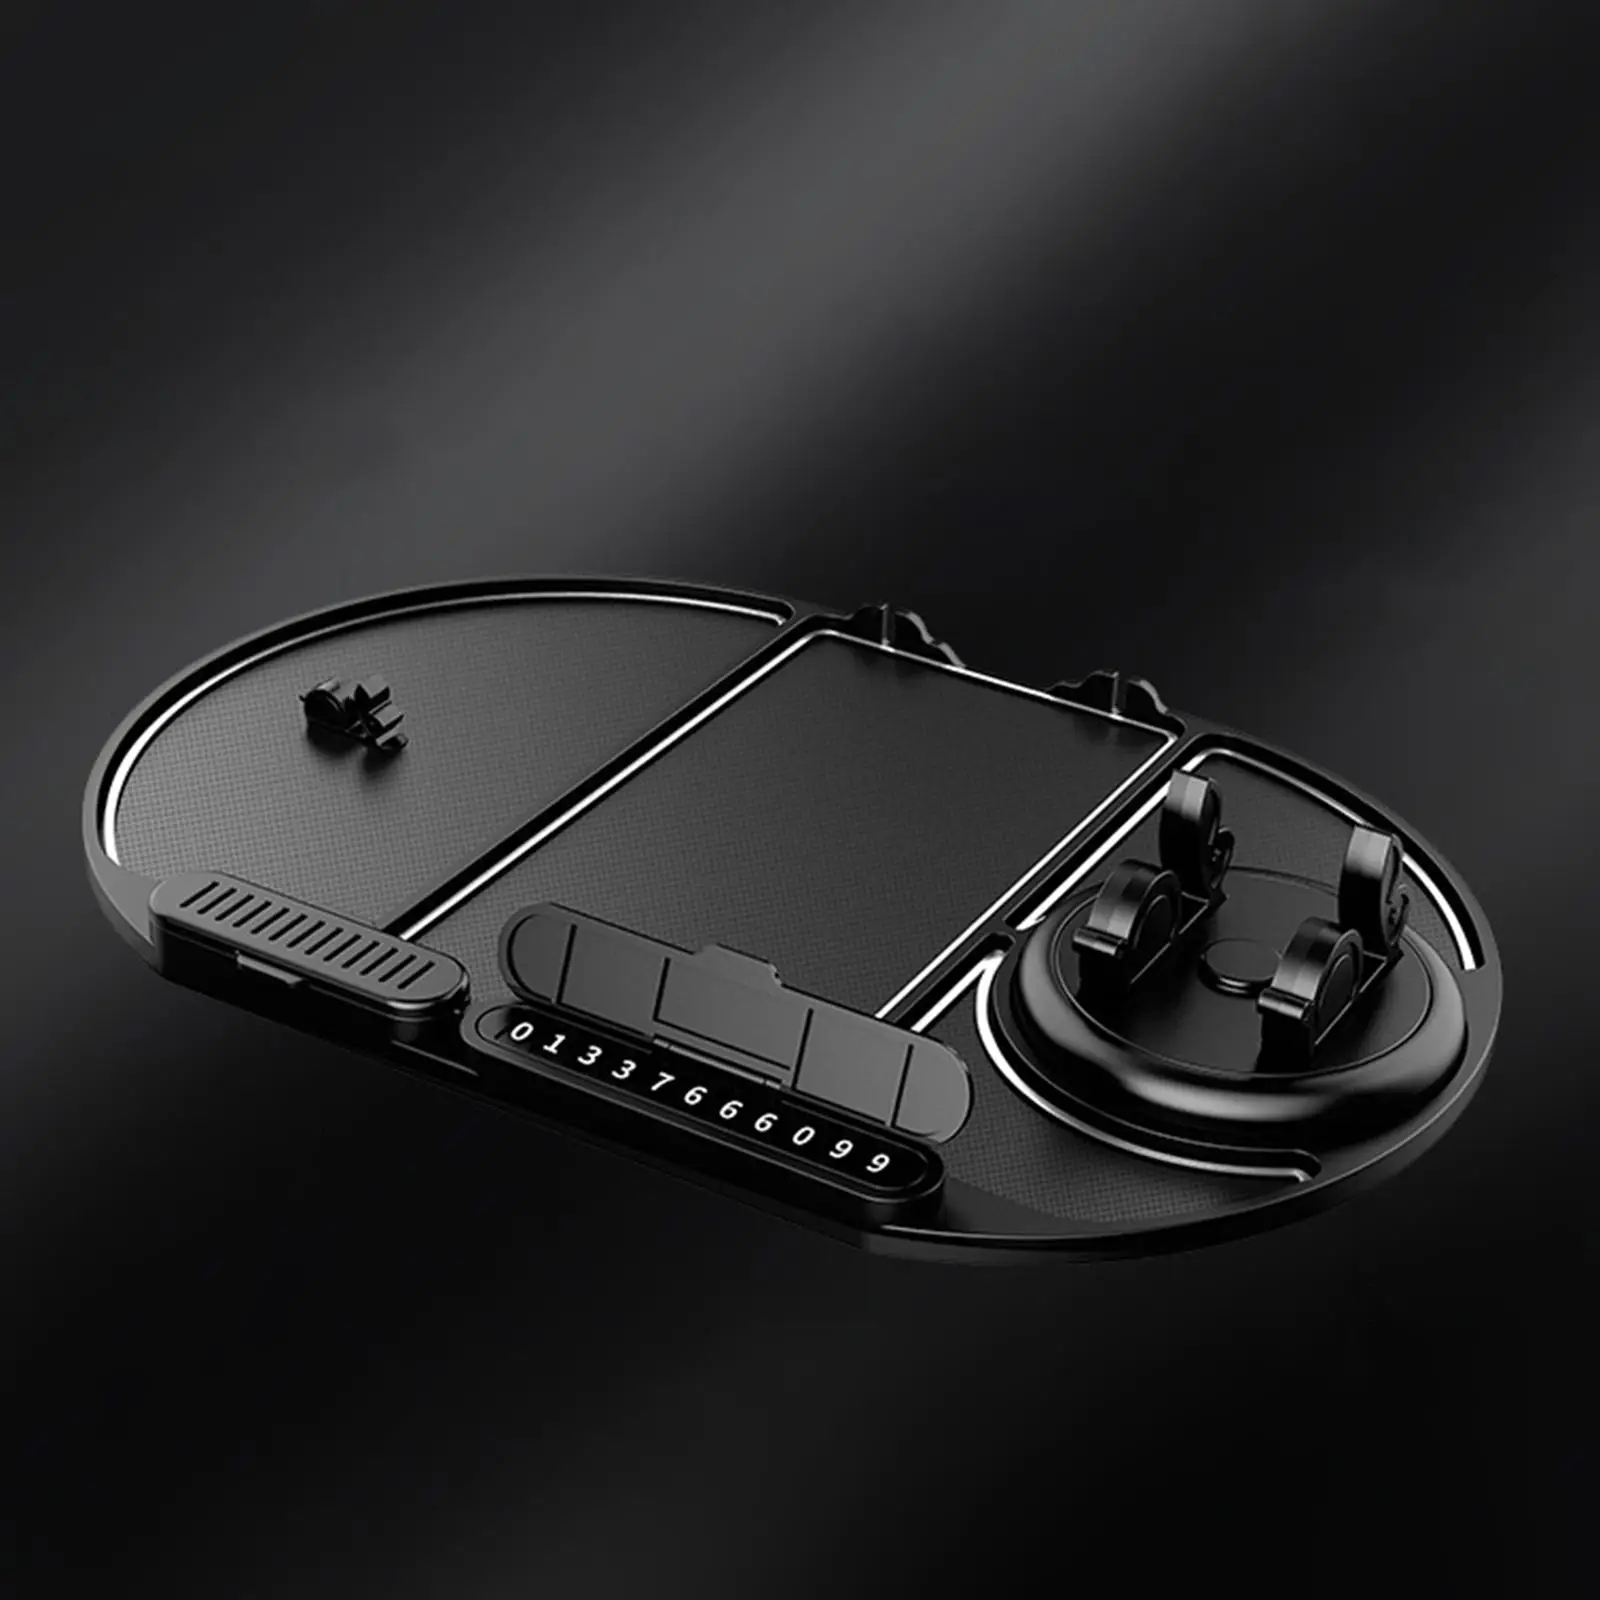 Dashboard Pad Automotive Interior Washable for Phones Keys Perfume Rubber Pads Dash Phone Mount Holder Reusable Anti Slip Mat